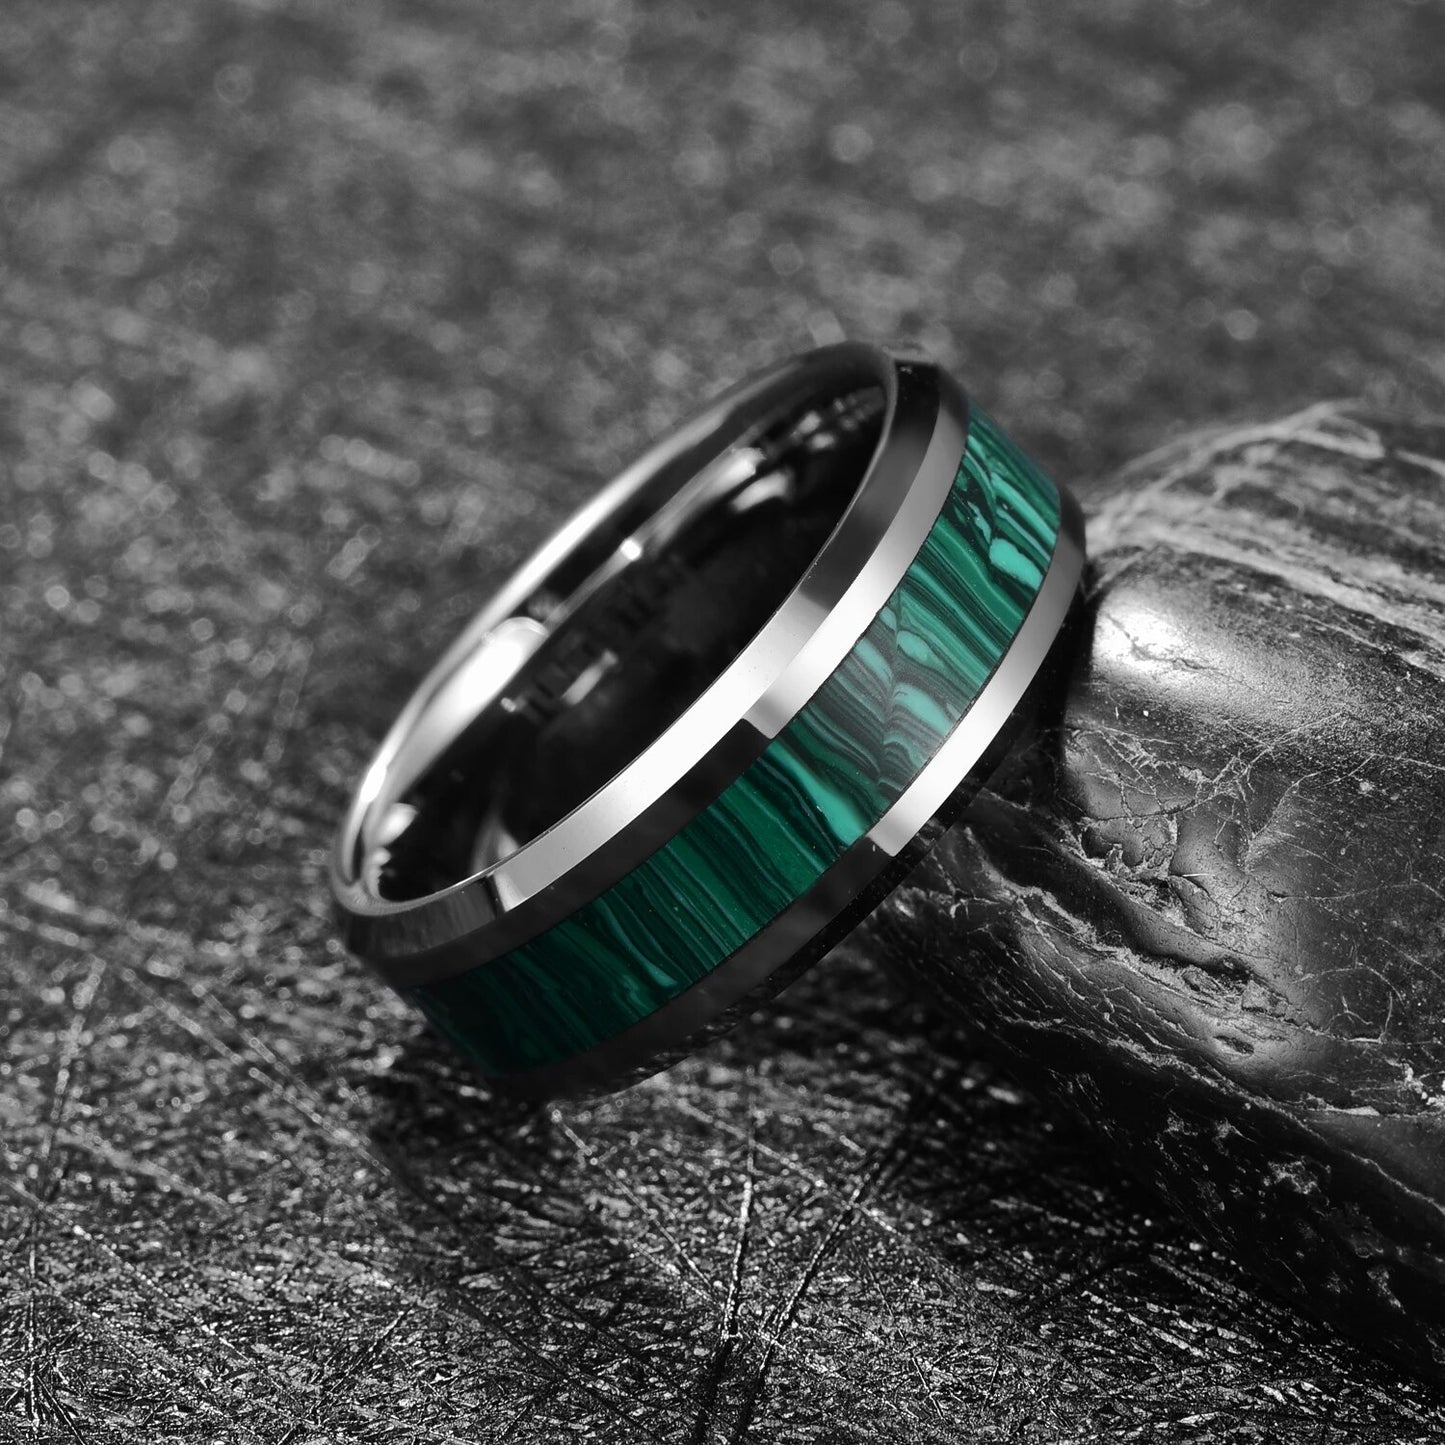 BONLAVIE Inlaid Artificial Stone Dark Green Striped Tungsten Steel Ring Fashion Engagement Rings for Men Gift Size 7-12